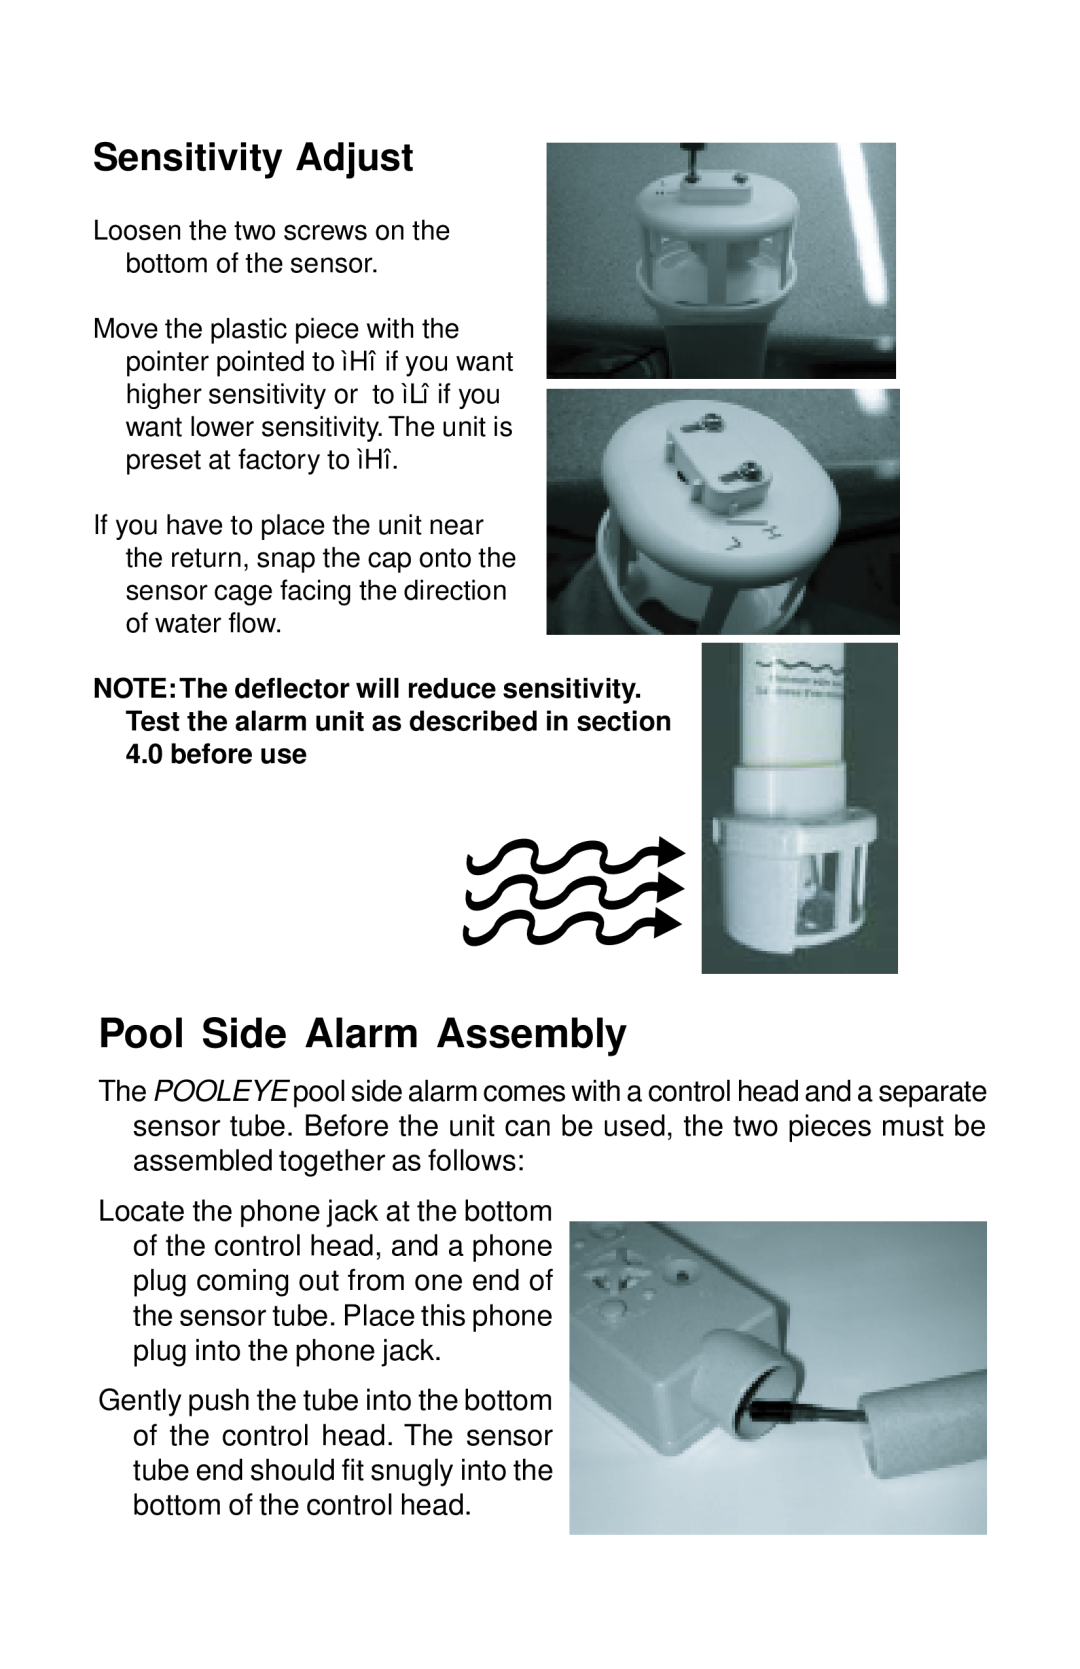 SmartPool Inc PE13 warranty Pool Side Alarm Assembly, Sensitivity Adjust 